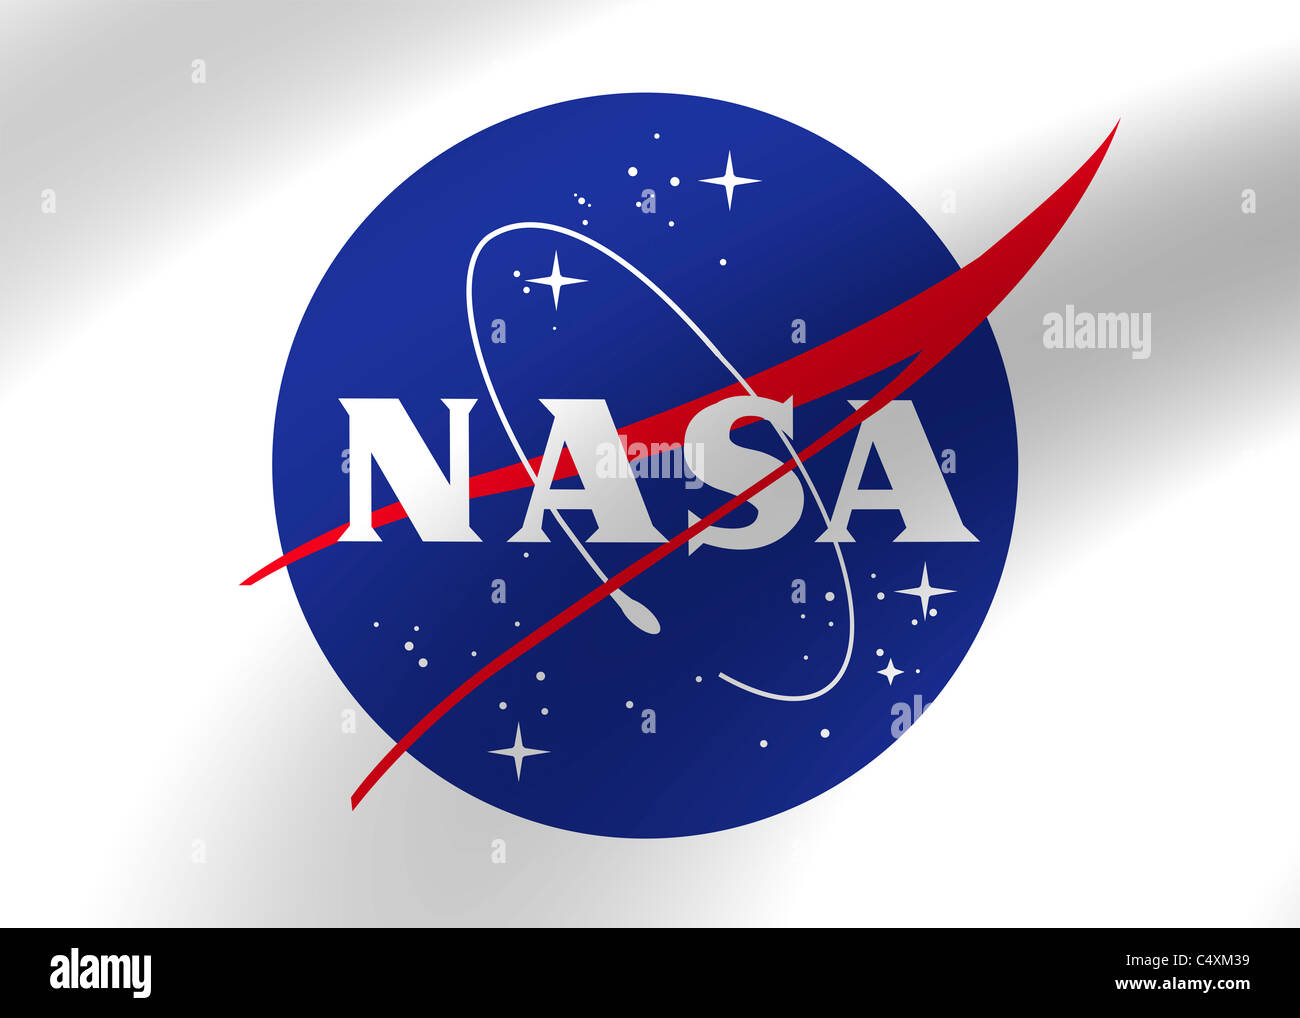 Nasa Logo Flag Symbol High Resolution Stock Photography and Images - Alamy